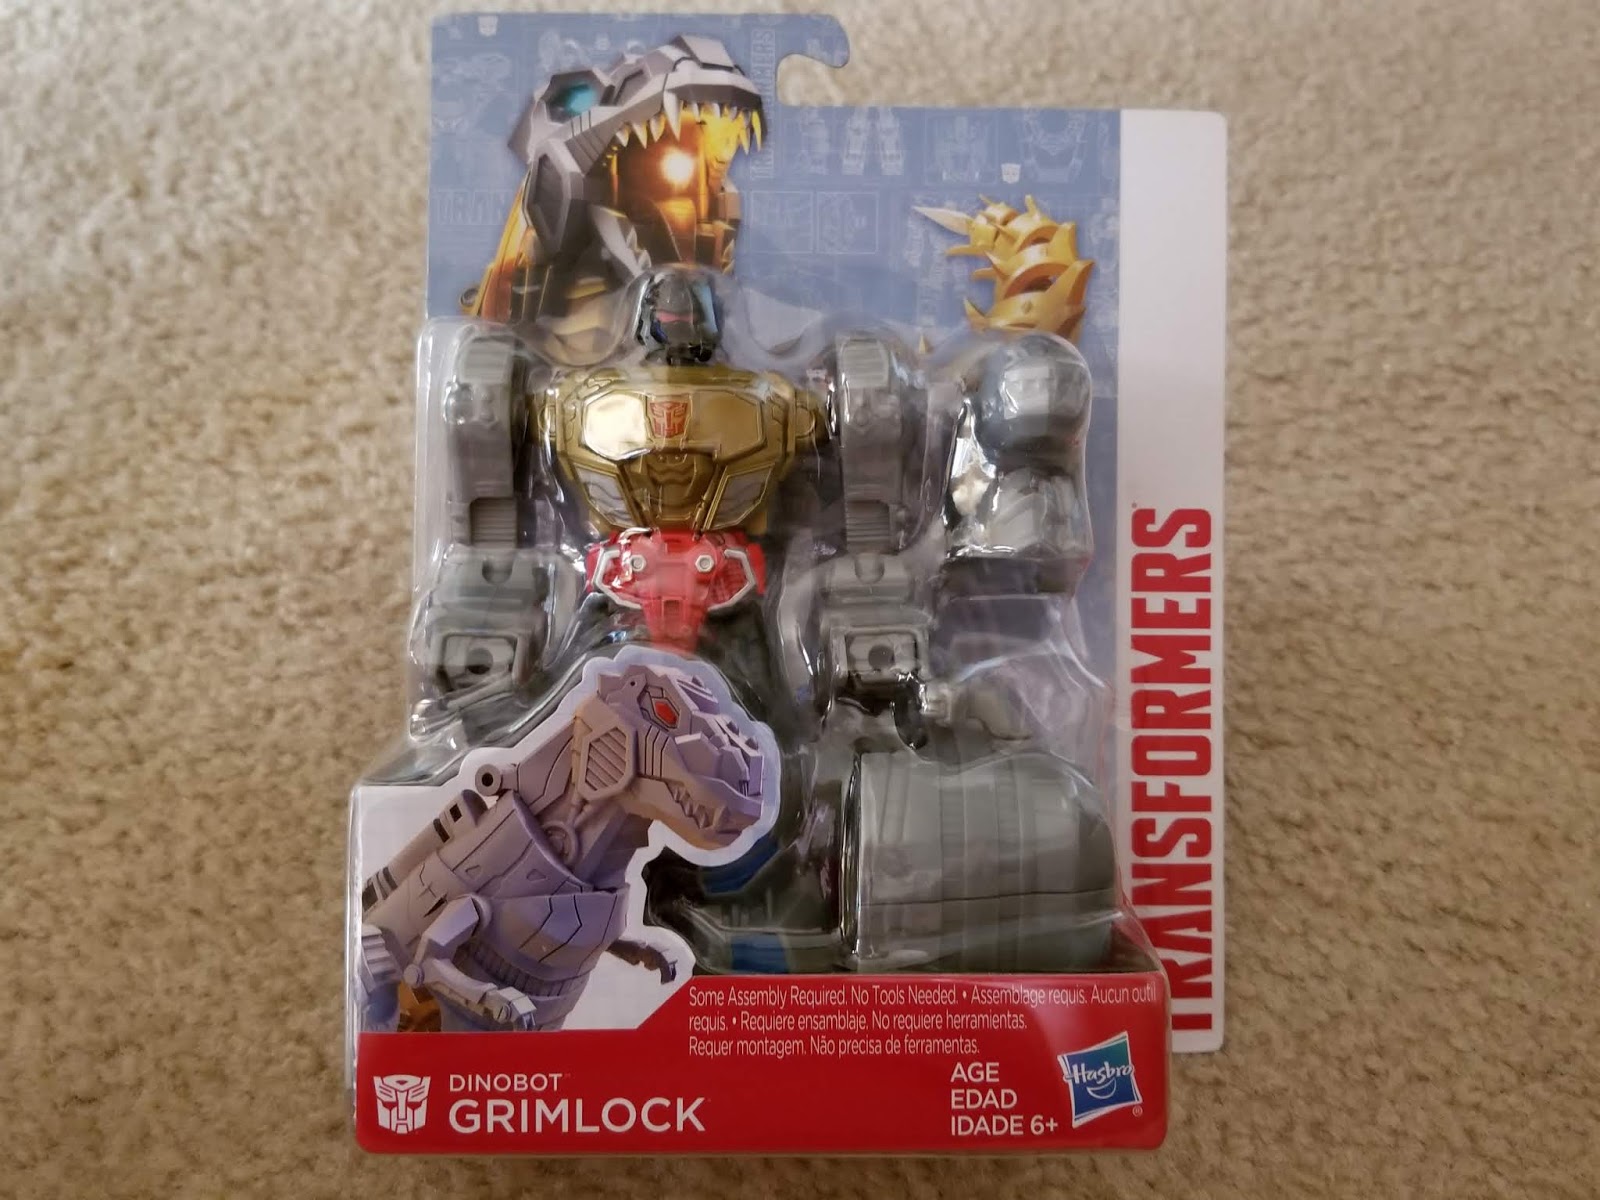 TRANSFORMERS - Transformers: King Grimlock will reign